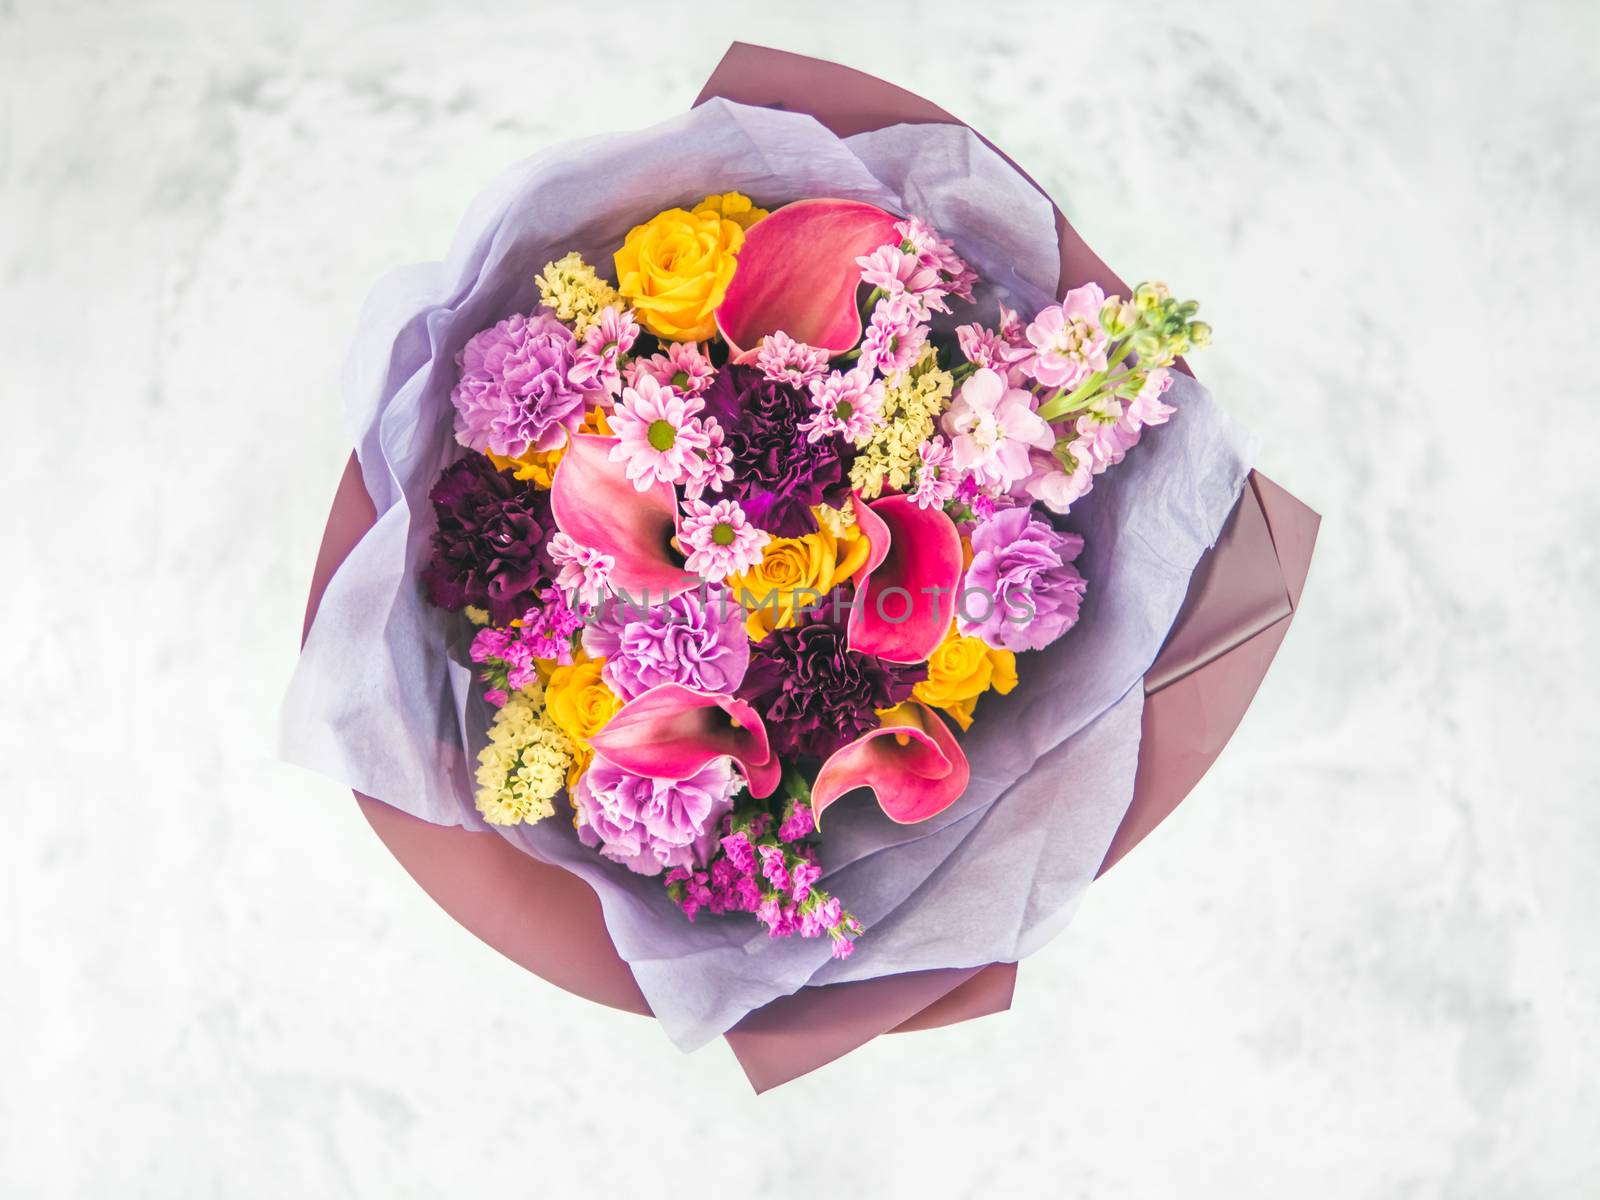 Lilac bouquet with arum lily or calla, roses, dianthus, chrysanthemum, limonium, matthiola. Focus on calla. Shallow DOF, copy space